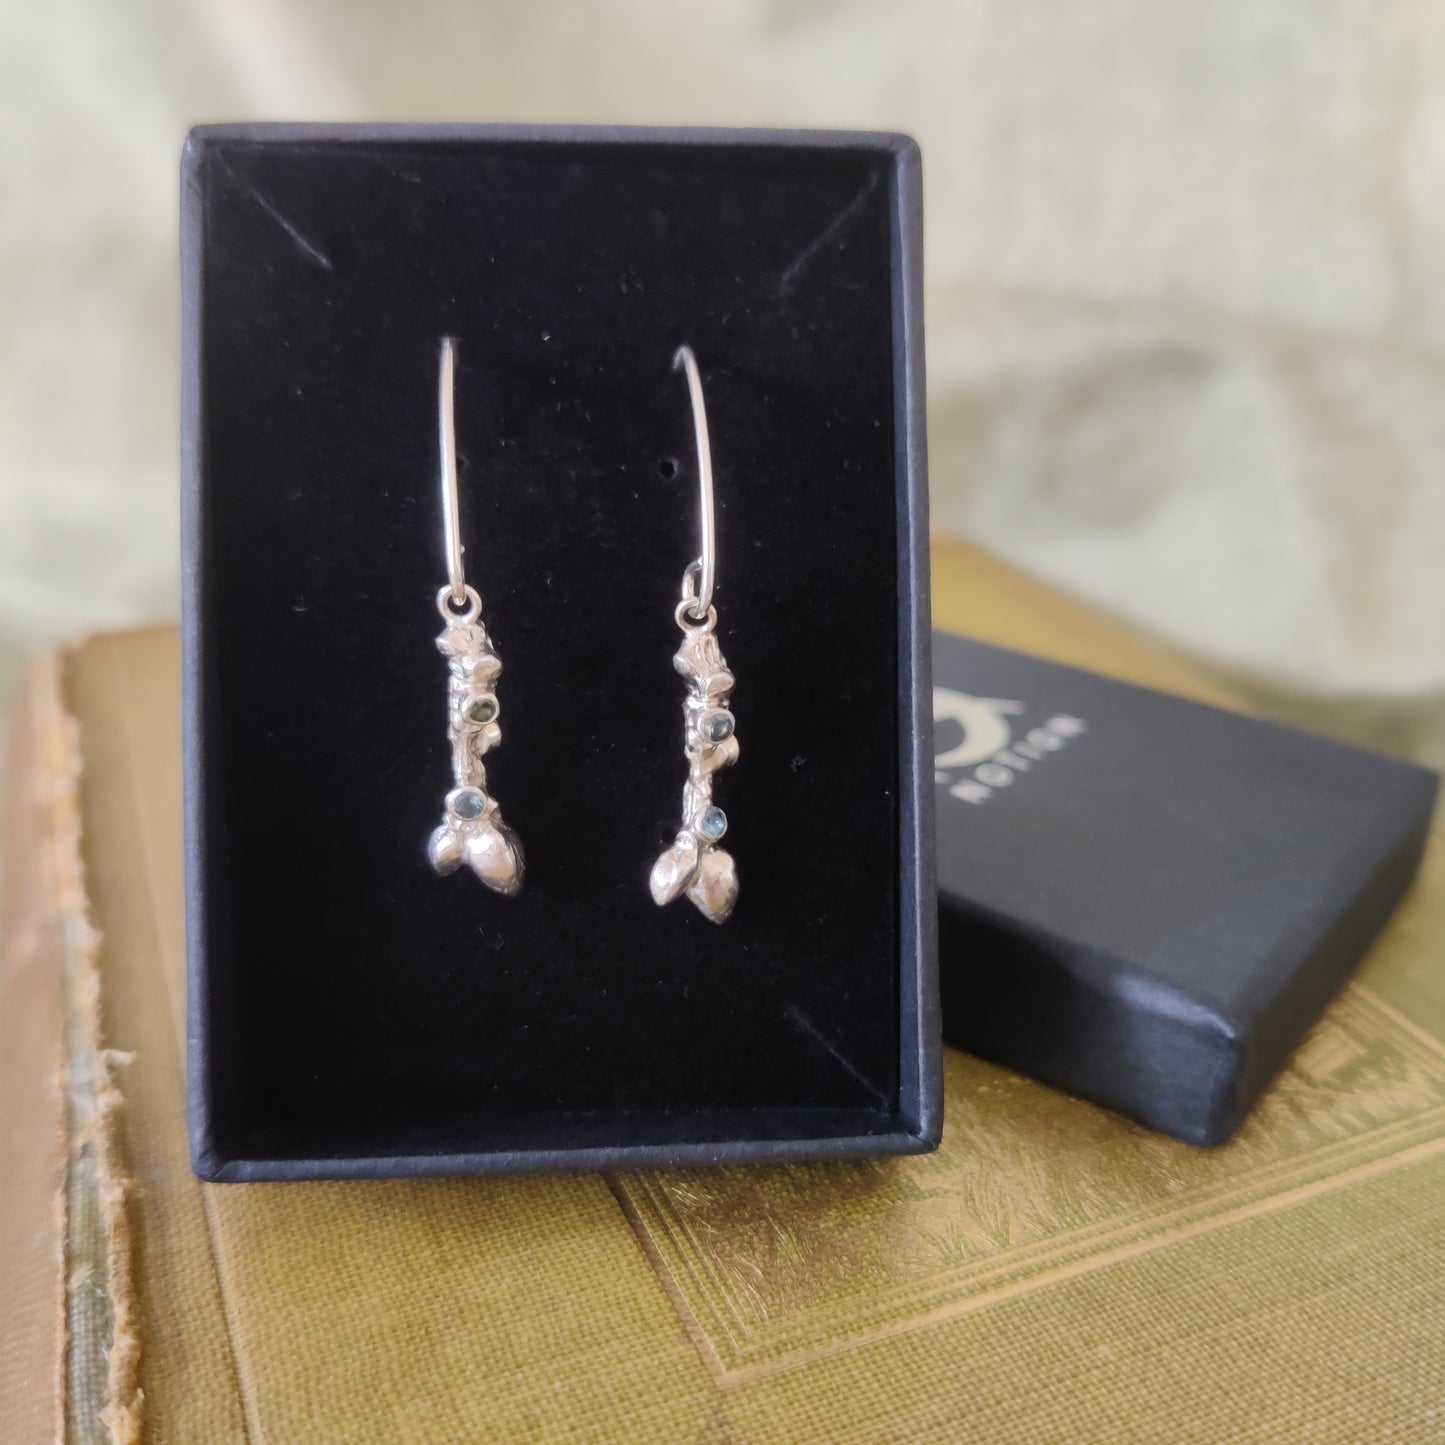 Dangle earrings in silver in a display box by Notion Jewellery